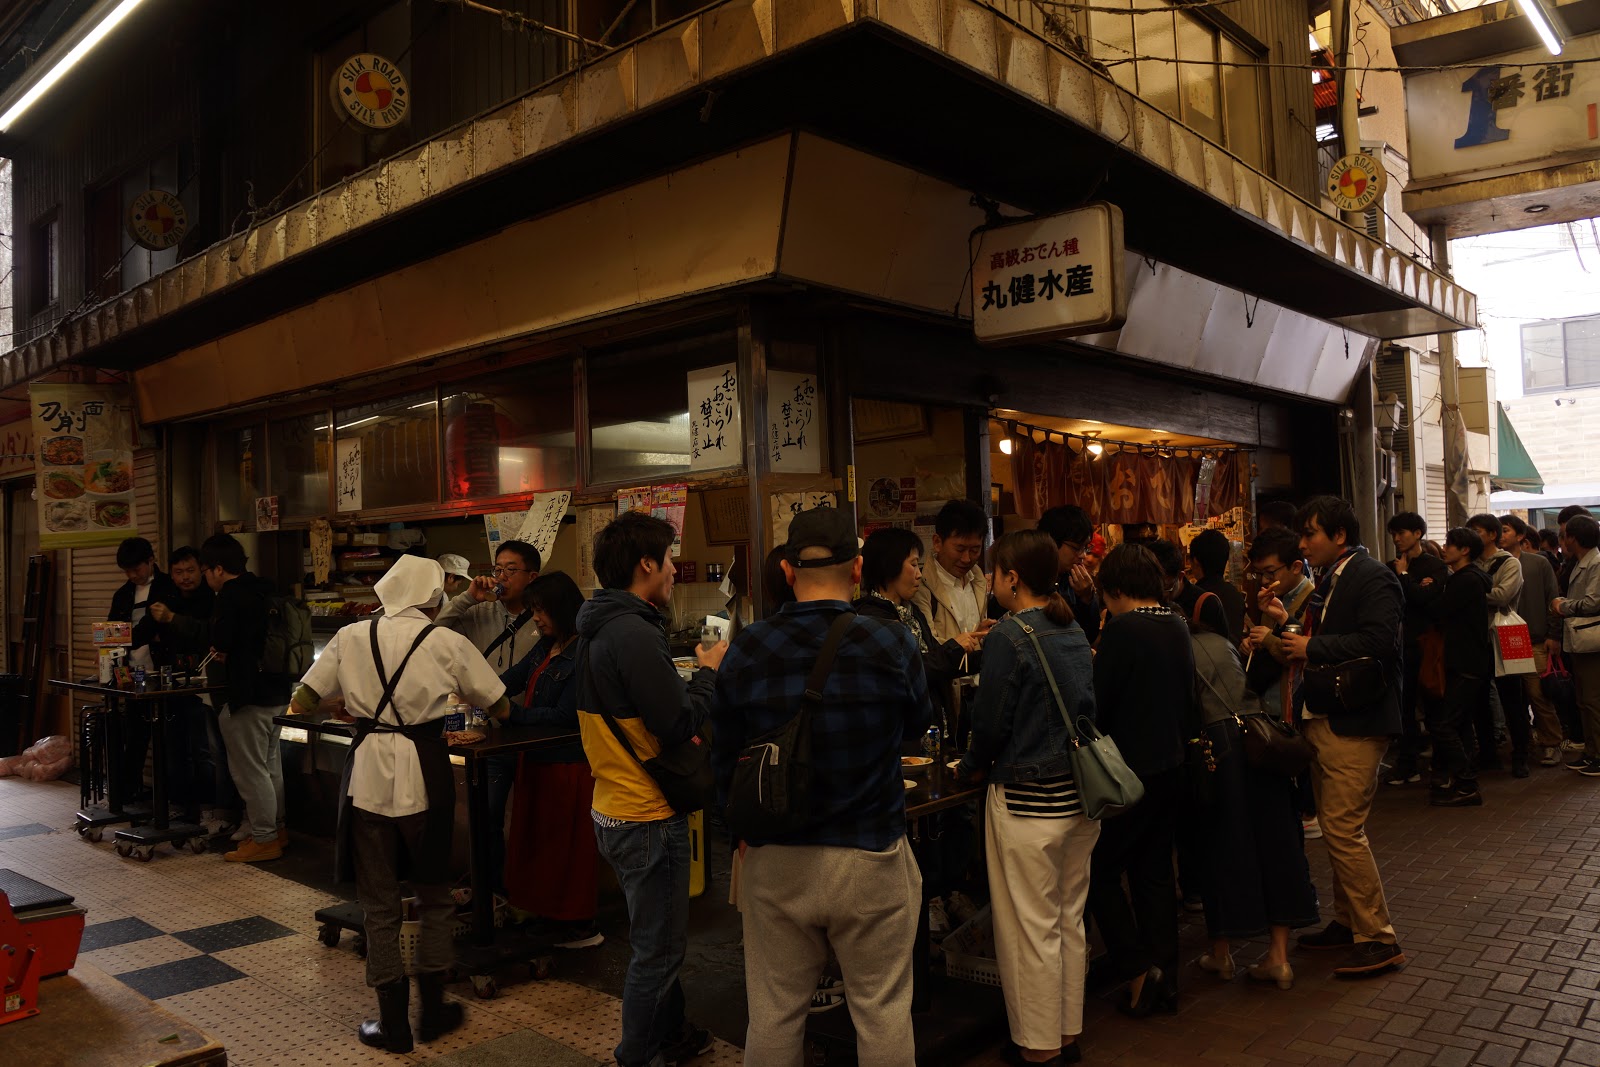 Tokyo Explorer S Map 一番街シルクロード 赤羽商店街のアーケード下の昼のみ センベロ飲み屋街